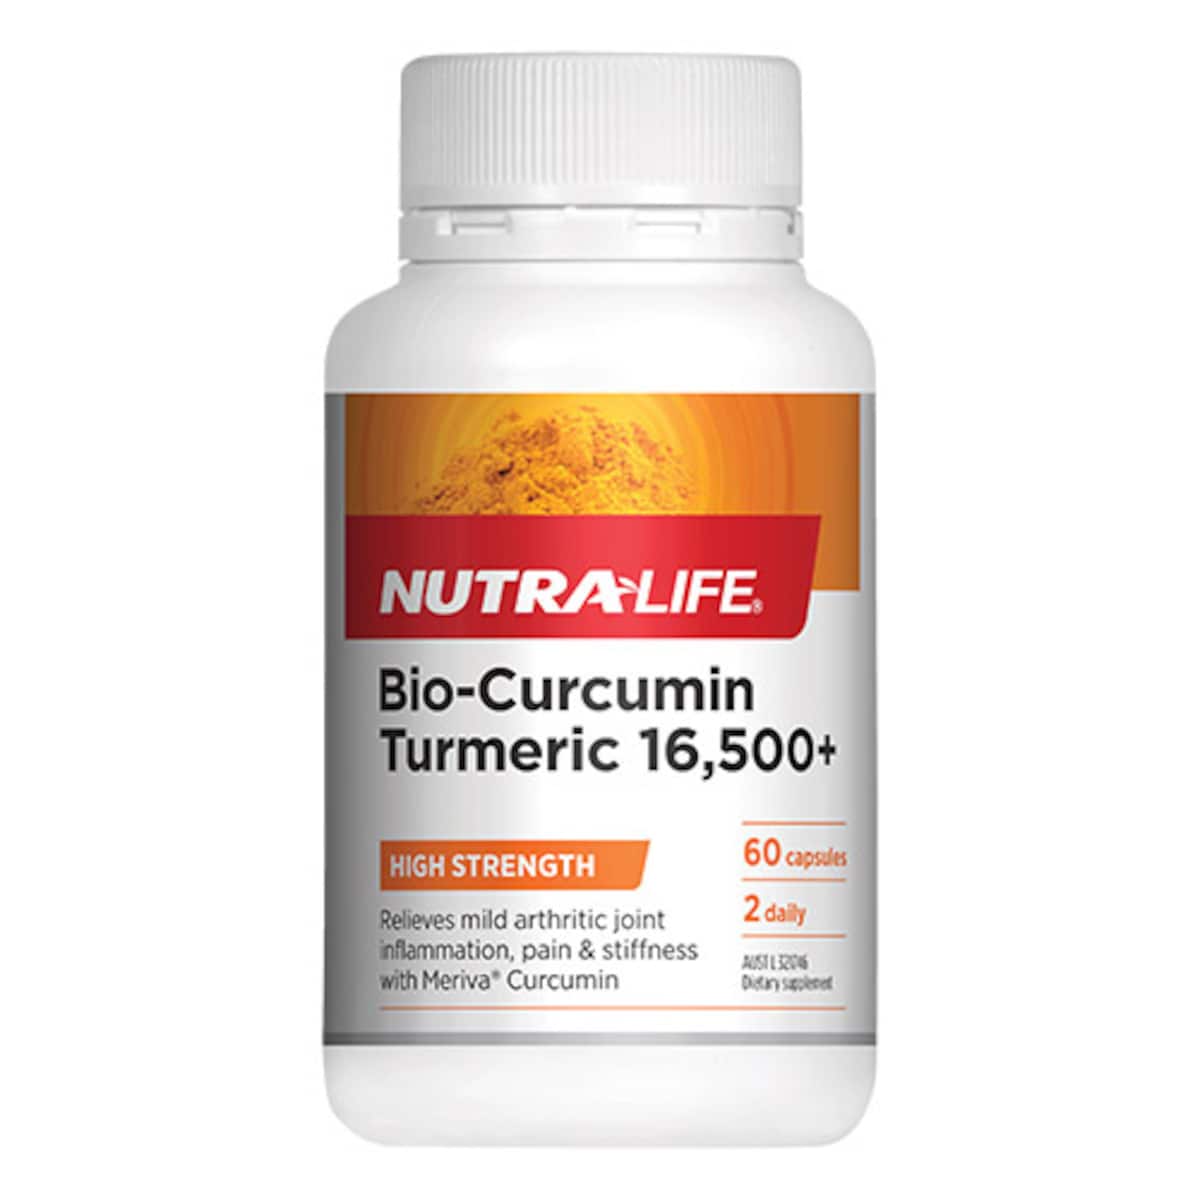 Nutra-Life Bio-Curcumin Turmeric 16500+ 60 Capsules Australia